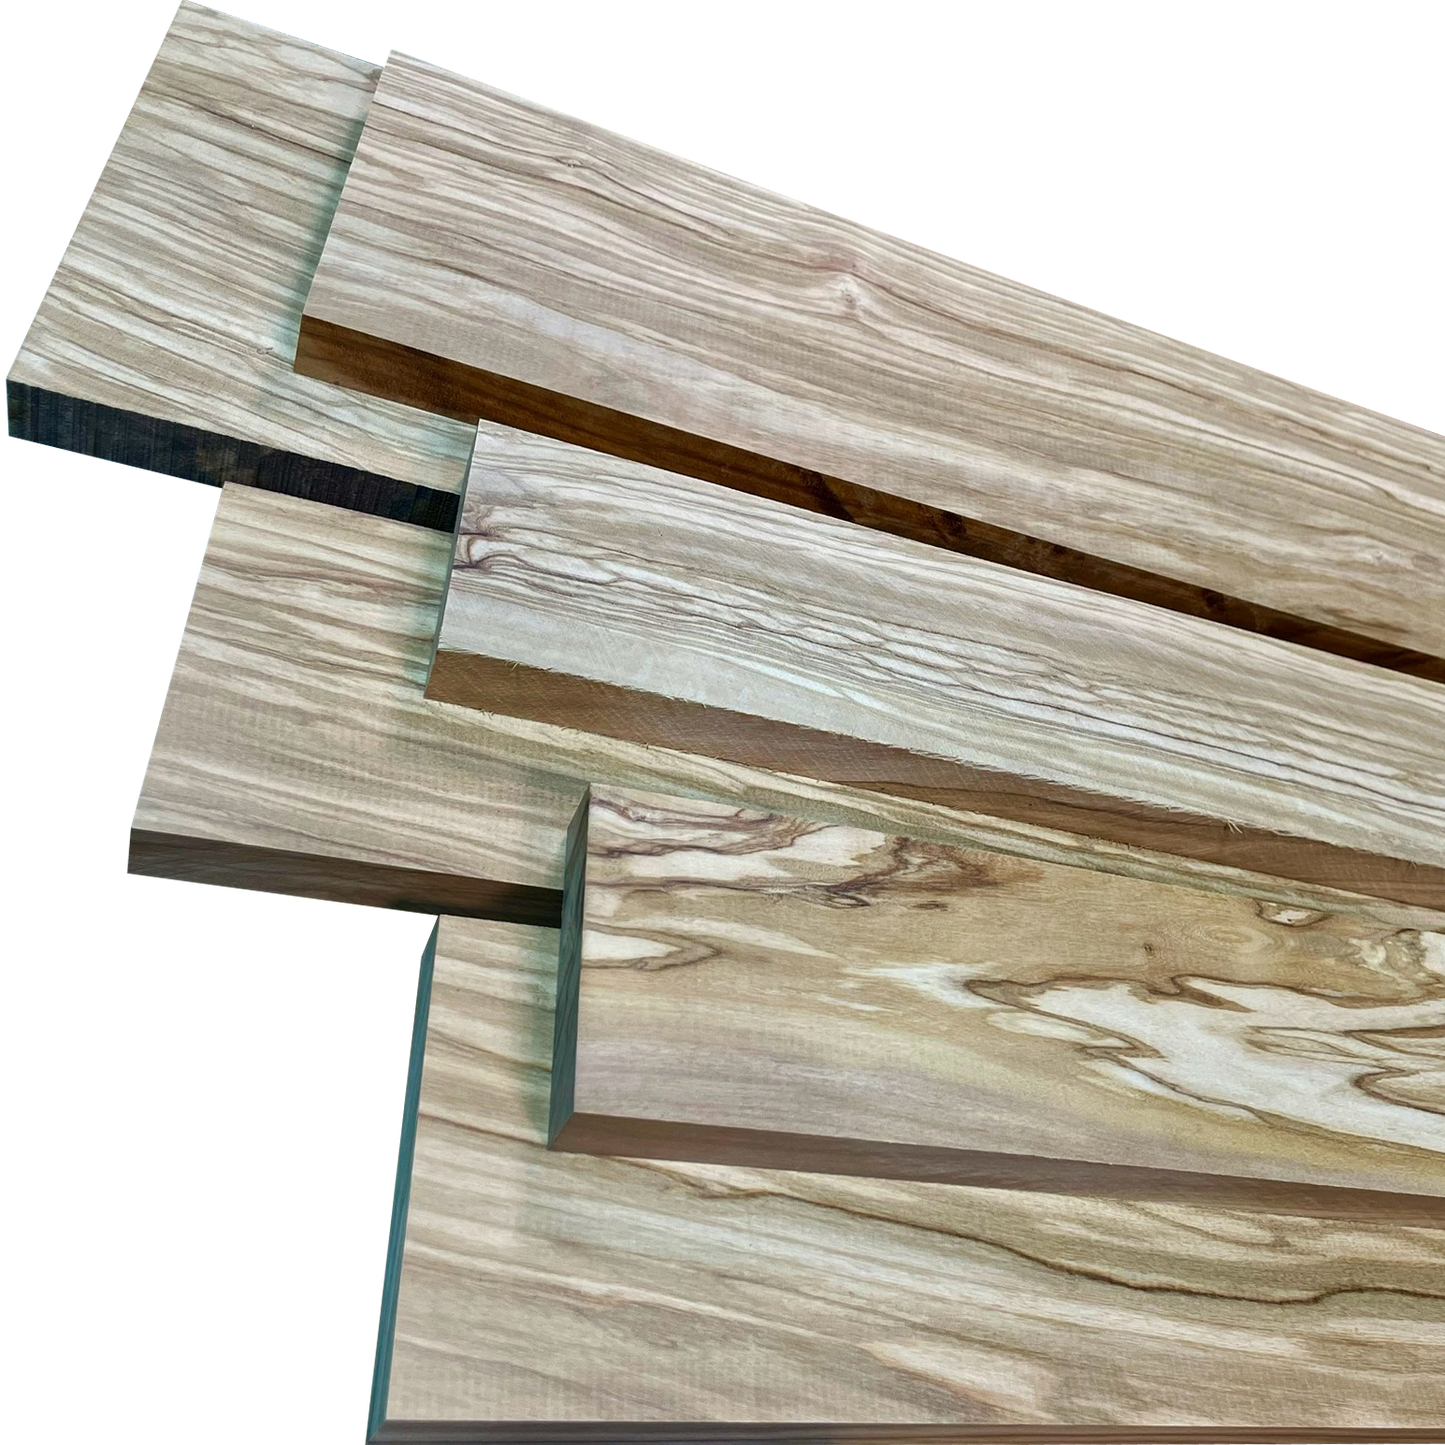 Olivewood - Dimensional Lumber